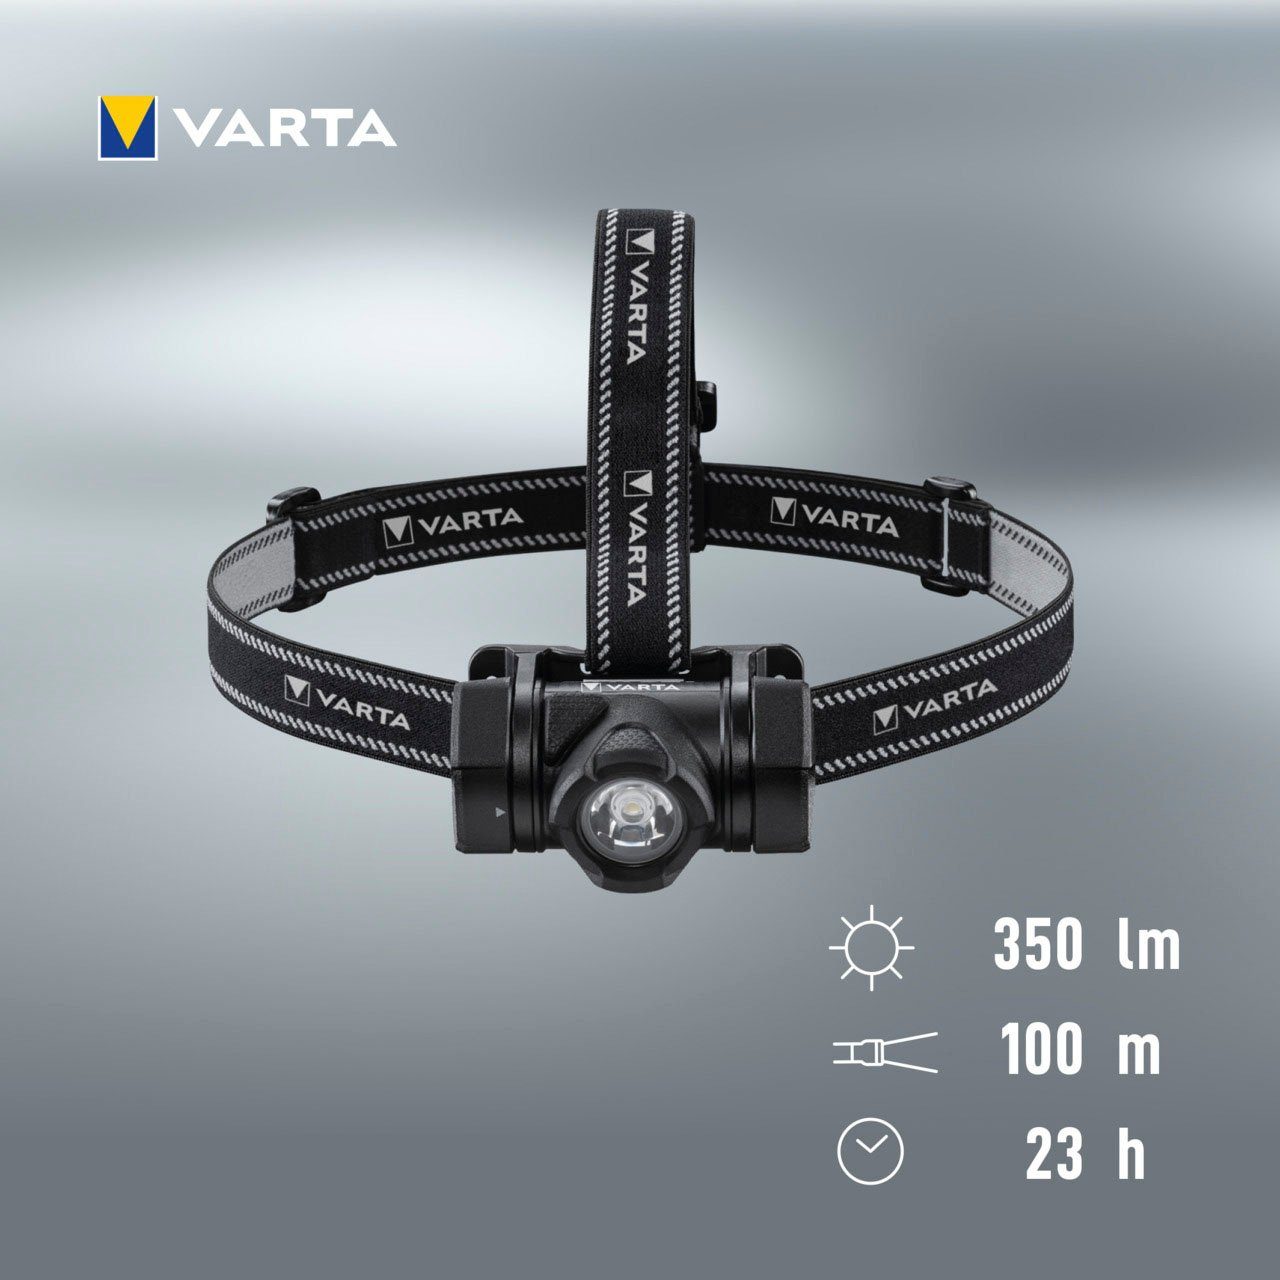 VARTA Stirnlampe Indestructible Pro H20